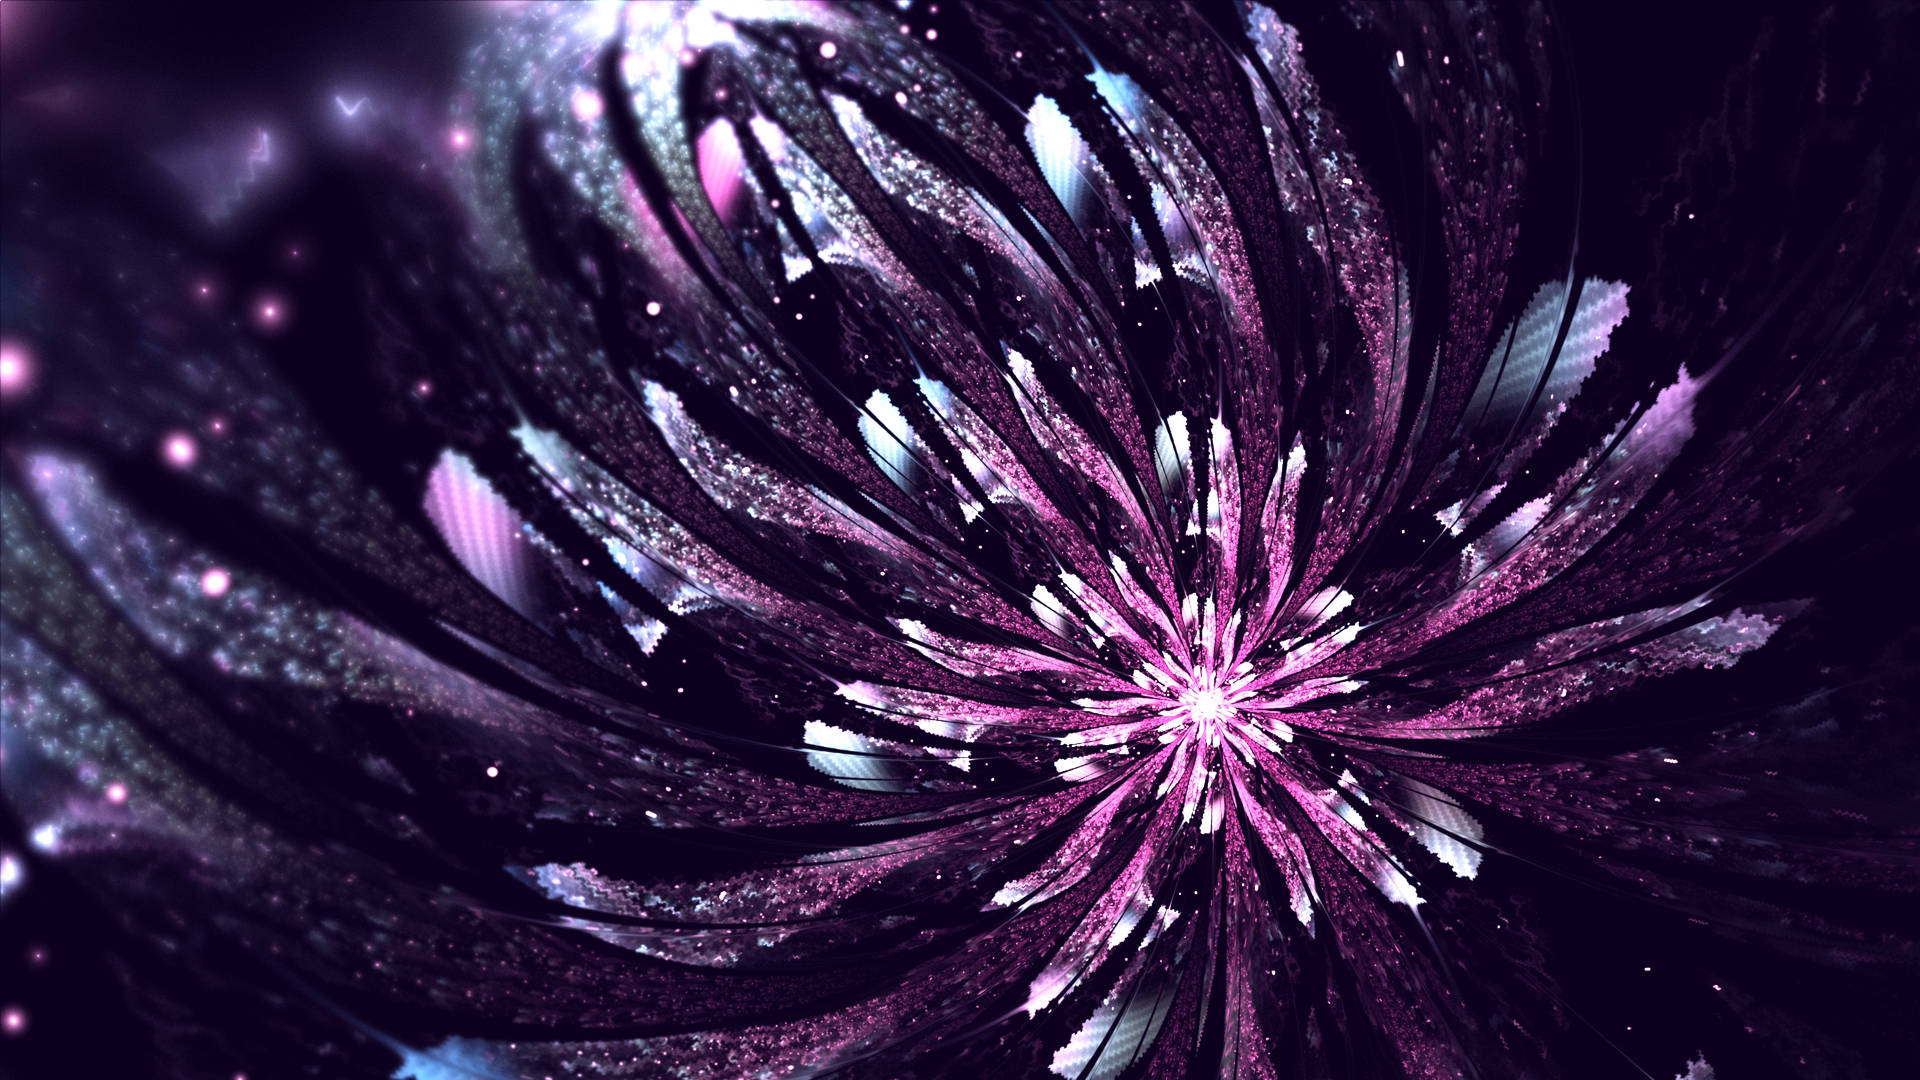 purple and black background design